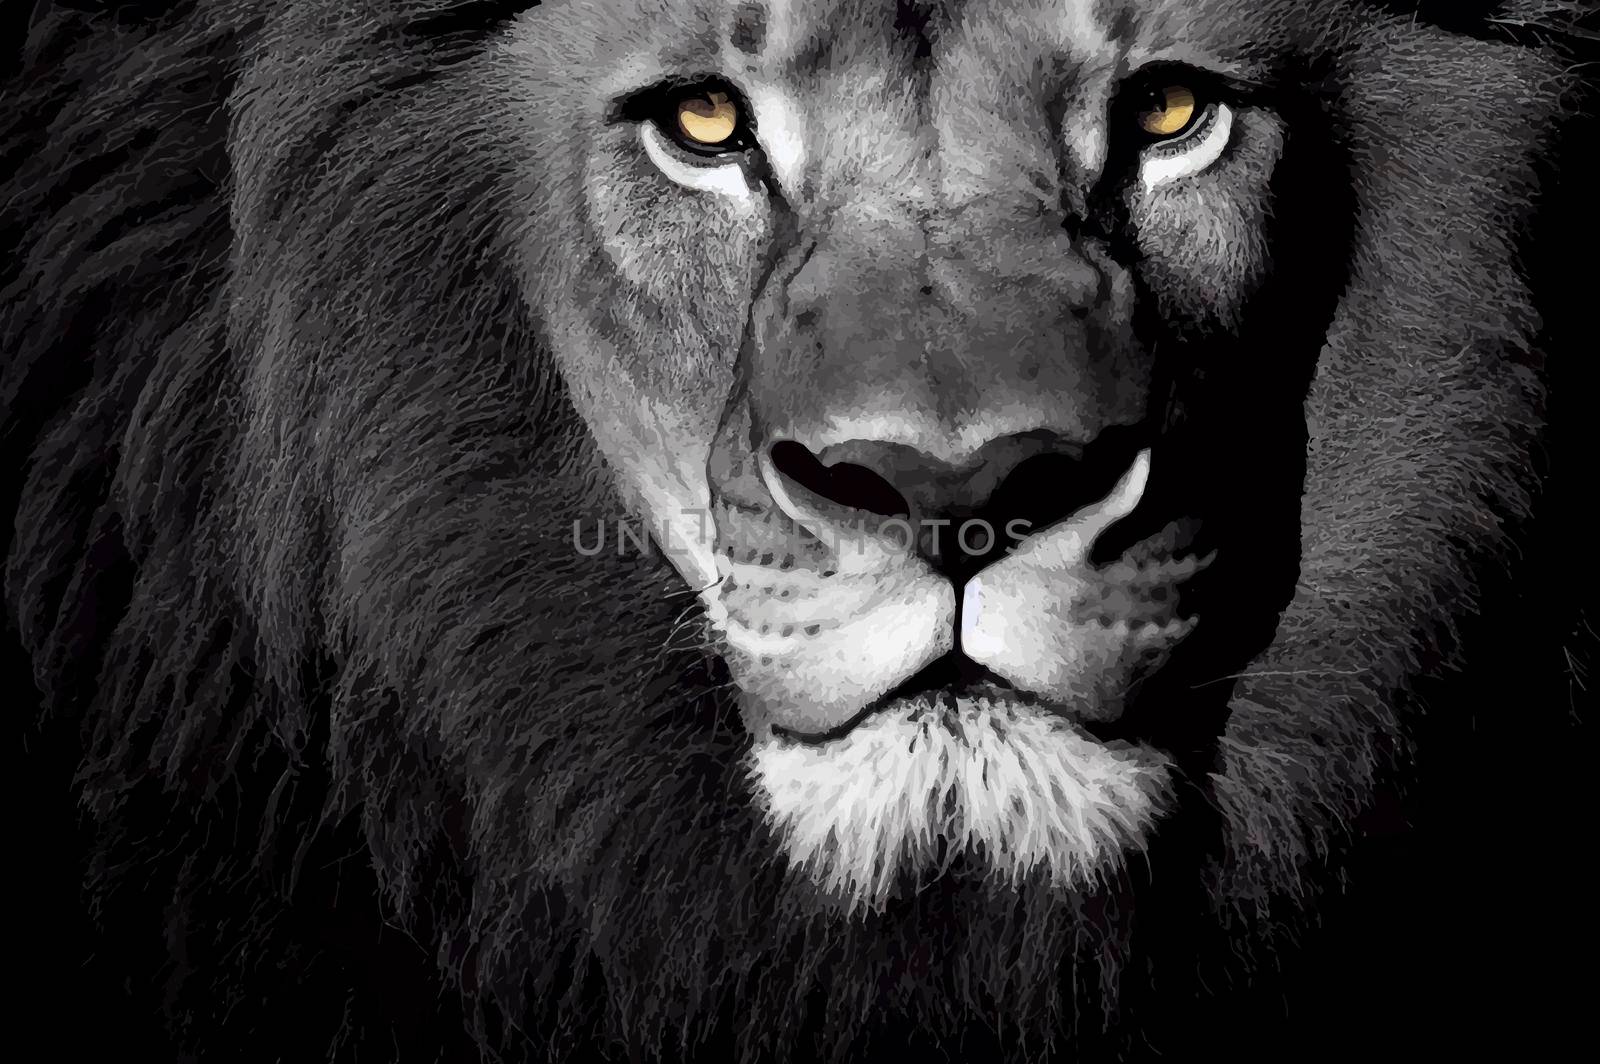 Portrait of a Lion. Close-up of wild lion face on black background.